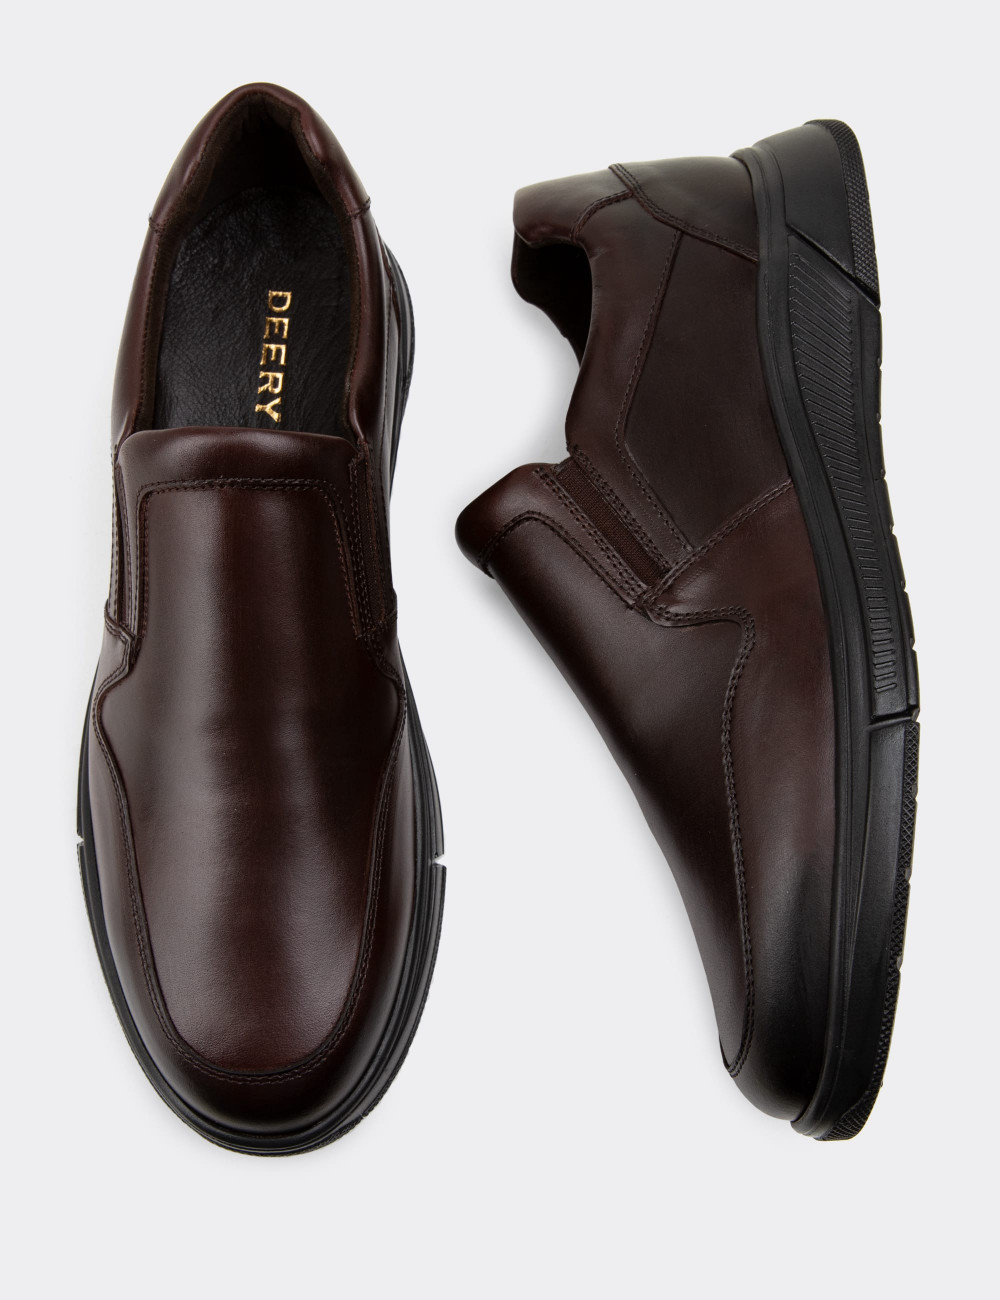 Hakiki Deri Kahverengi Loafer Erkek Ayakkabı - 01874MKHVC01